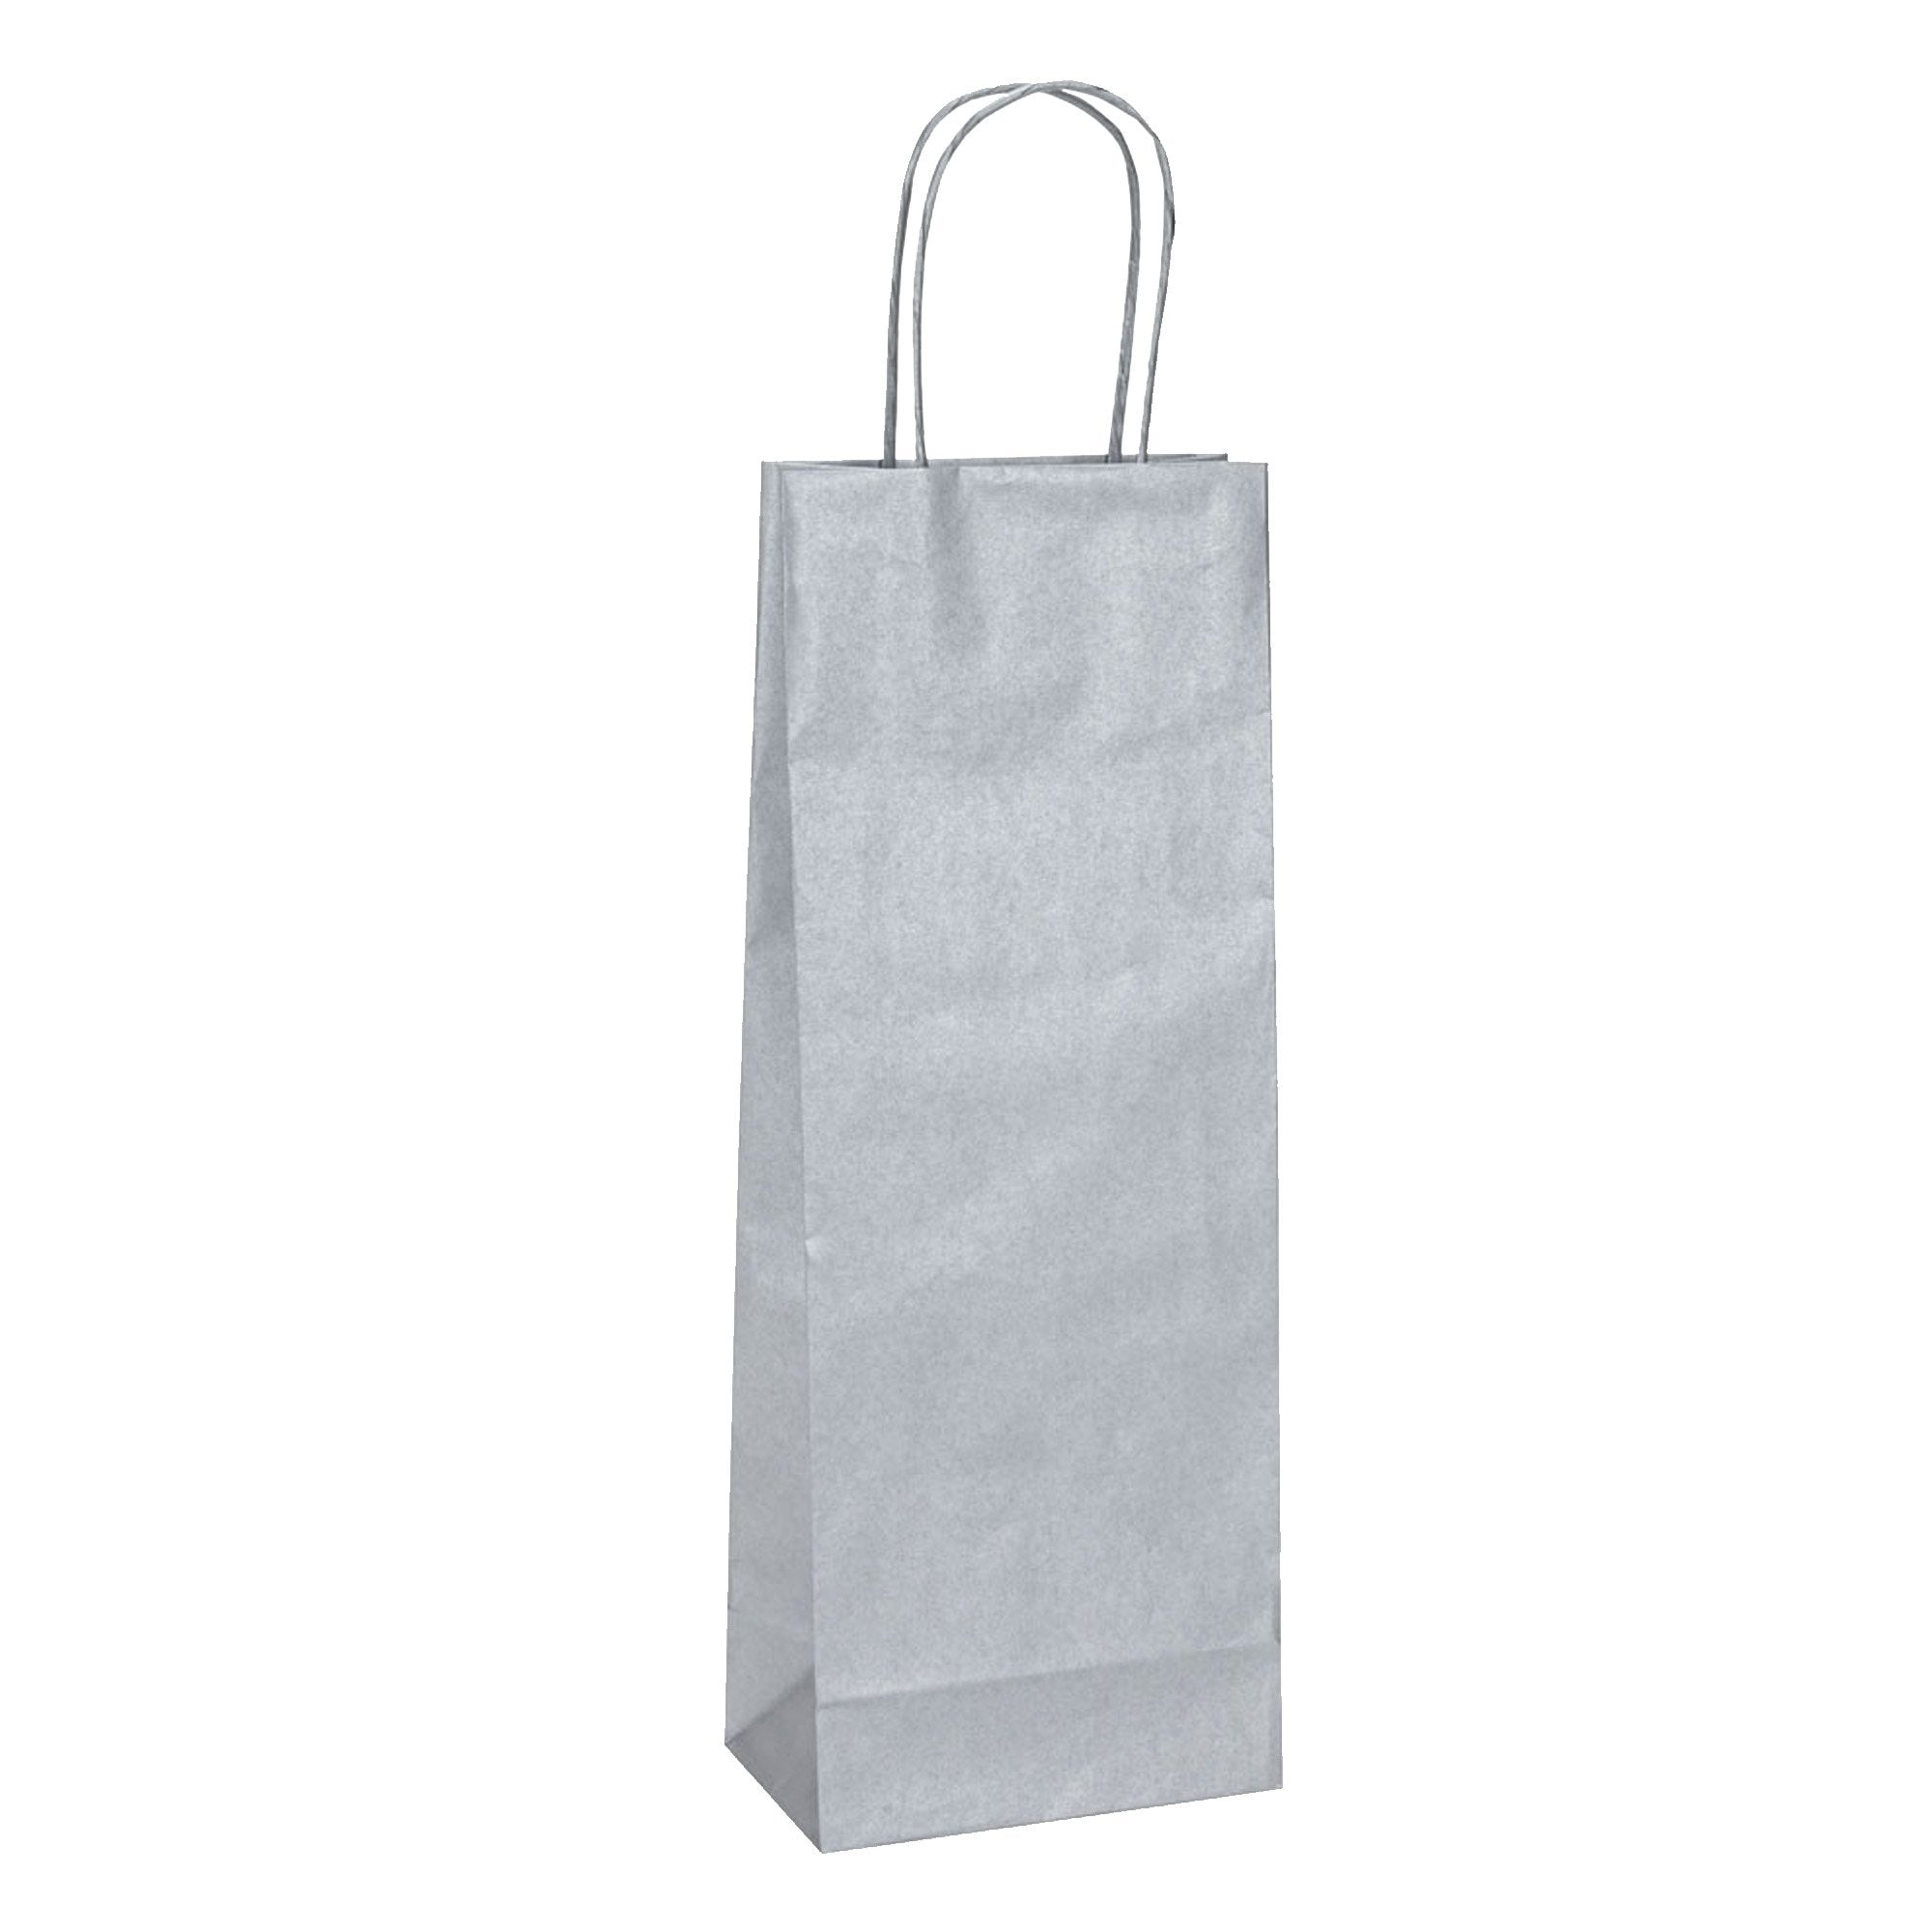 mainetti-bags-20-shoppers-carta-biokraft-14x9x38cm-portabottiglie-argento